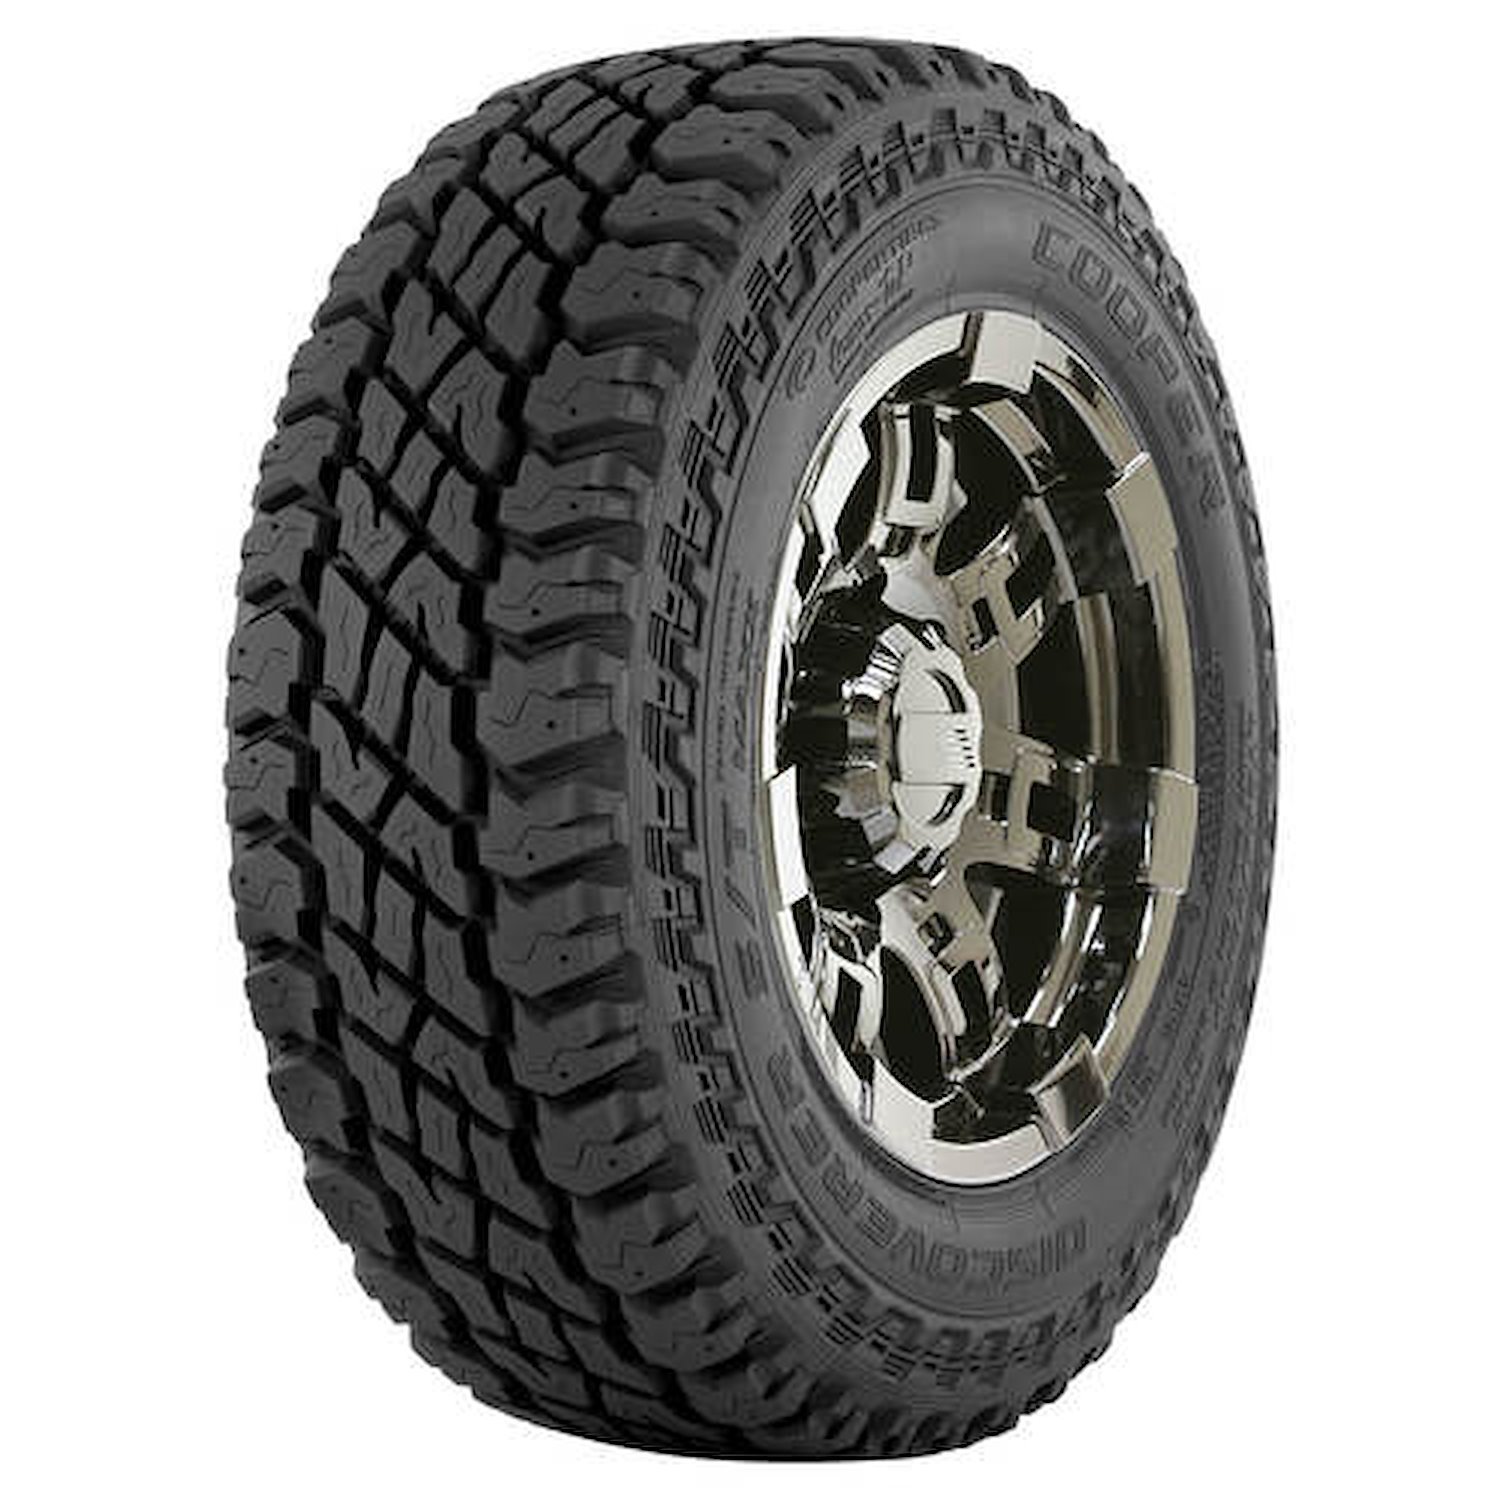 Discoverer S/T Maxx All-Terrain Tire, LT265/60R18